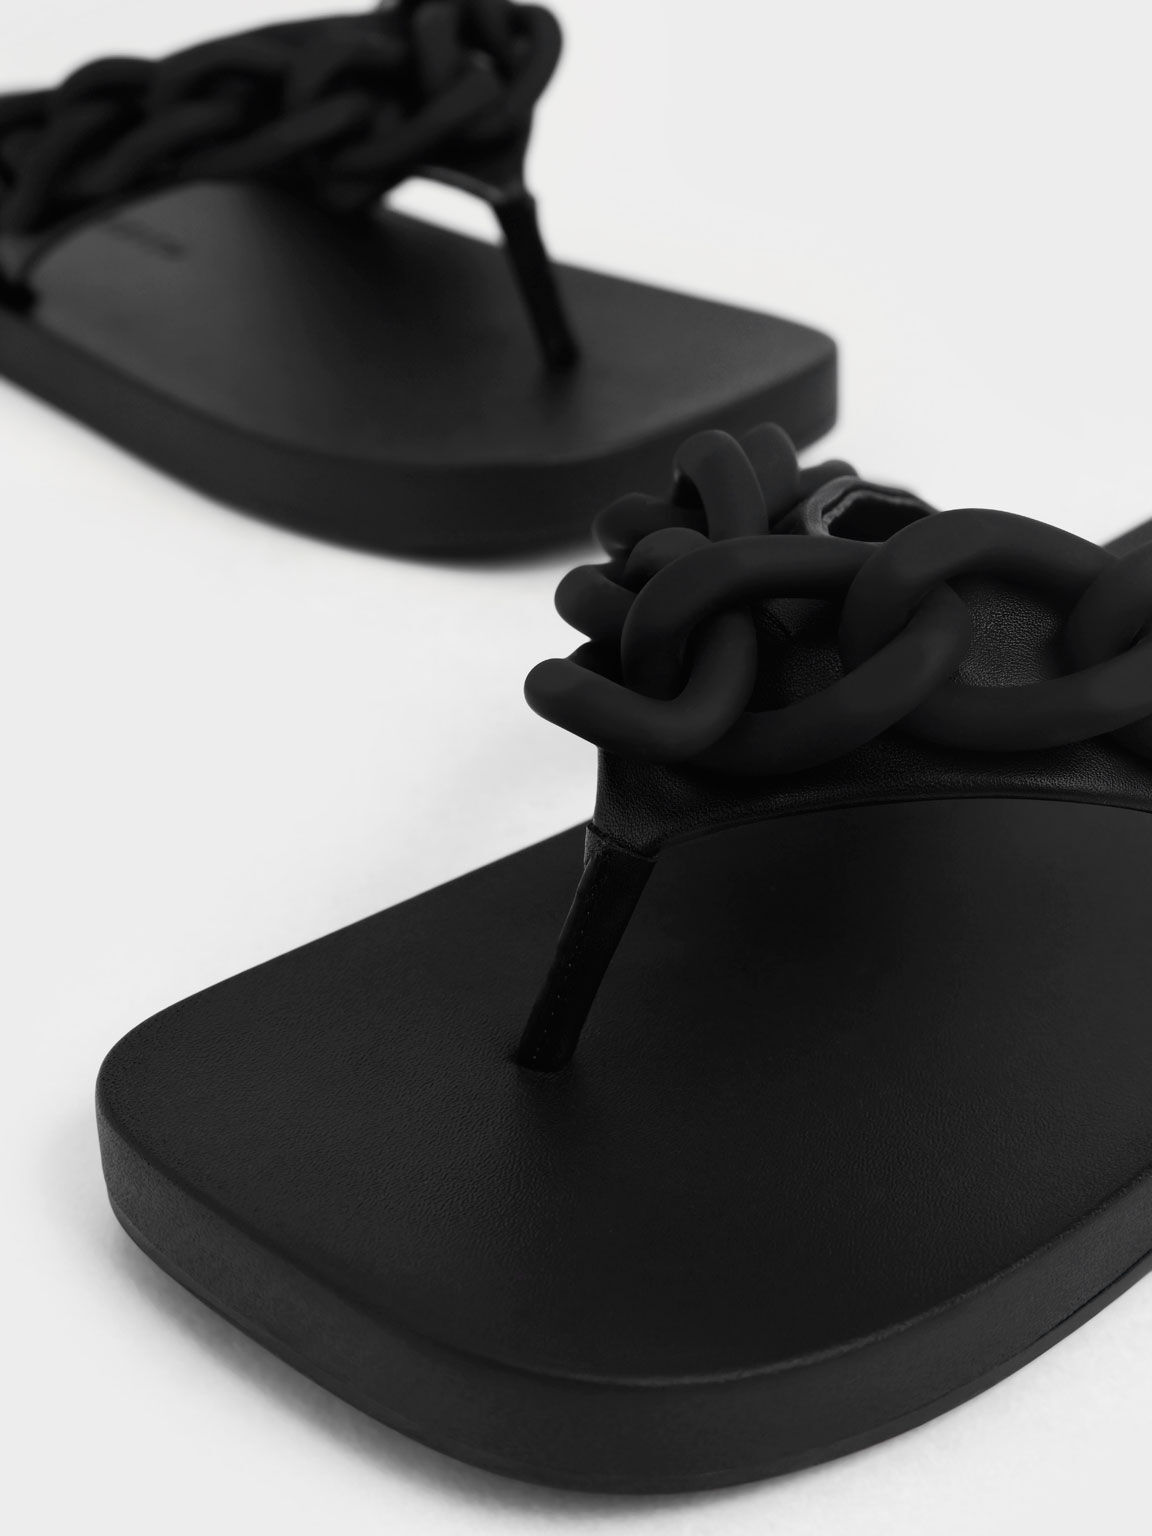 Chain Link Thong Sandals, Black, hi-res